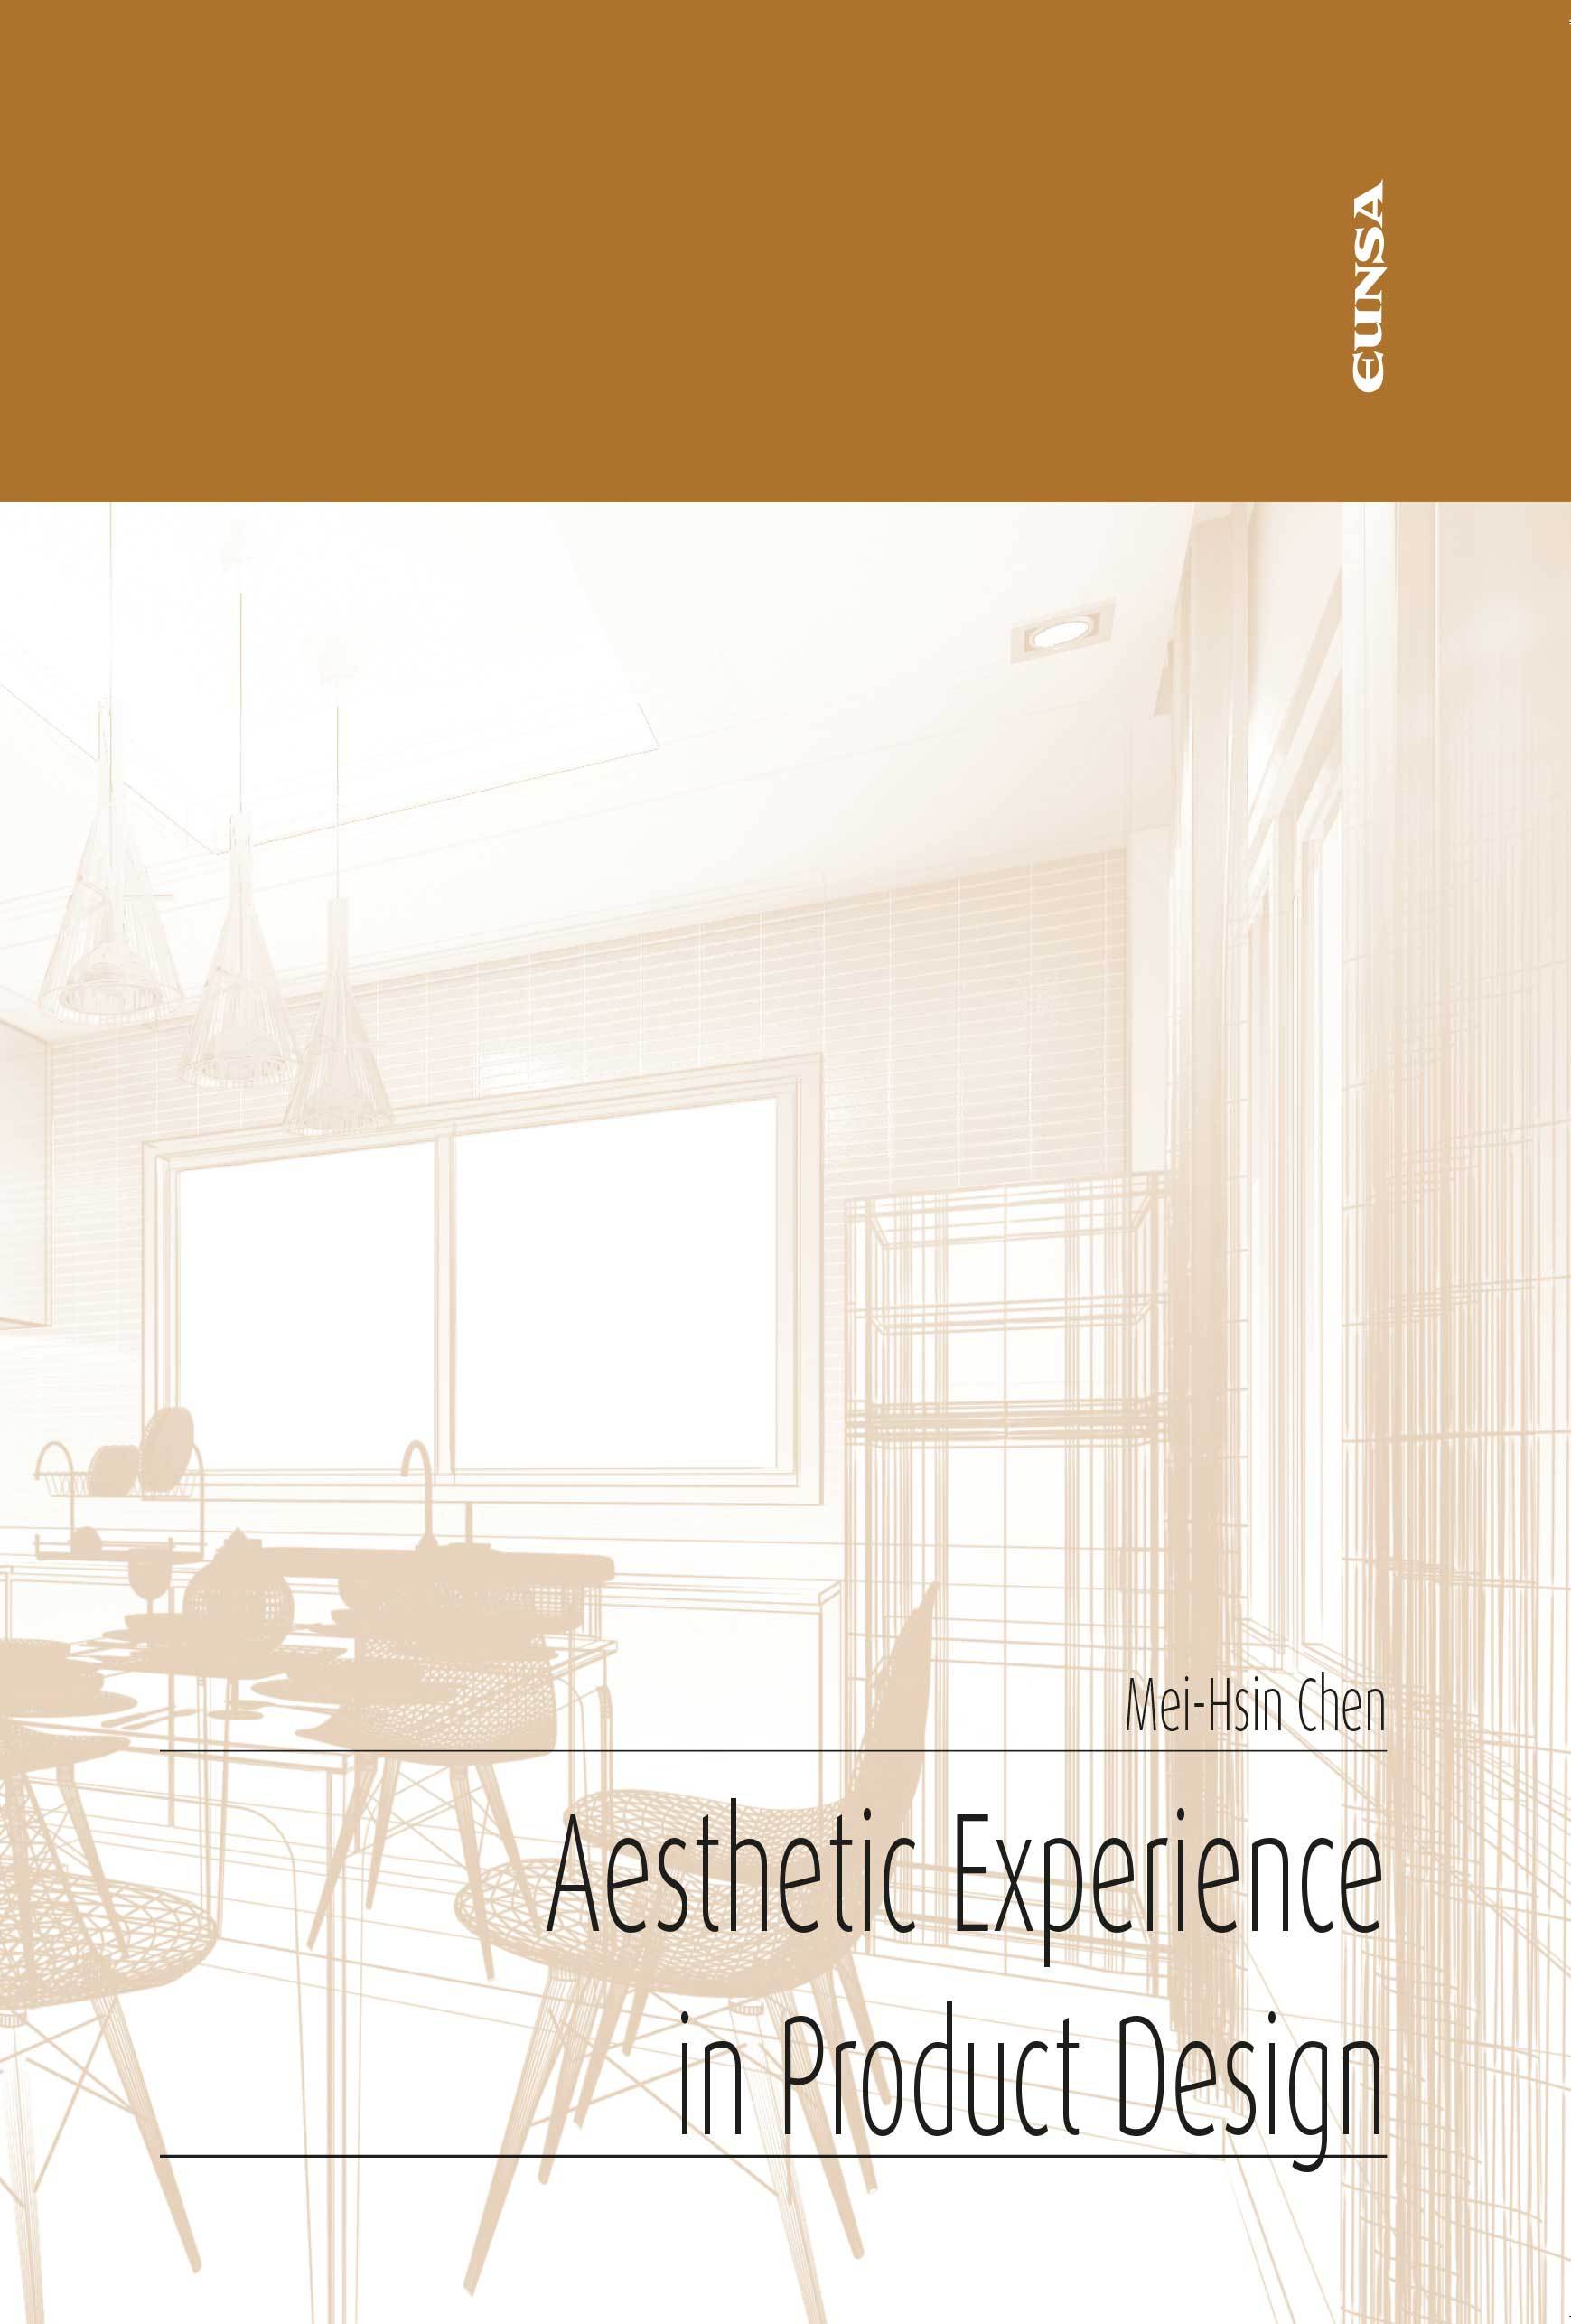 Imagen de portada del libro Aesthetic experience in product design